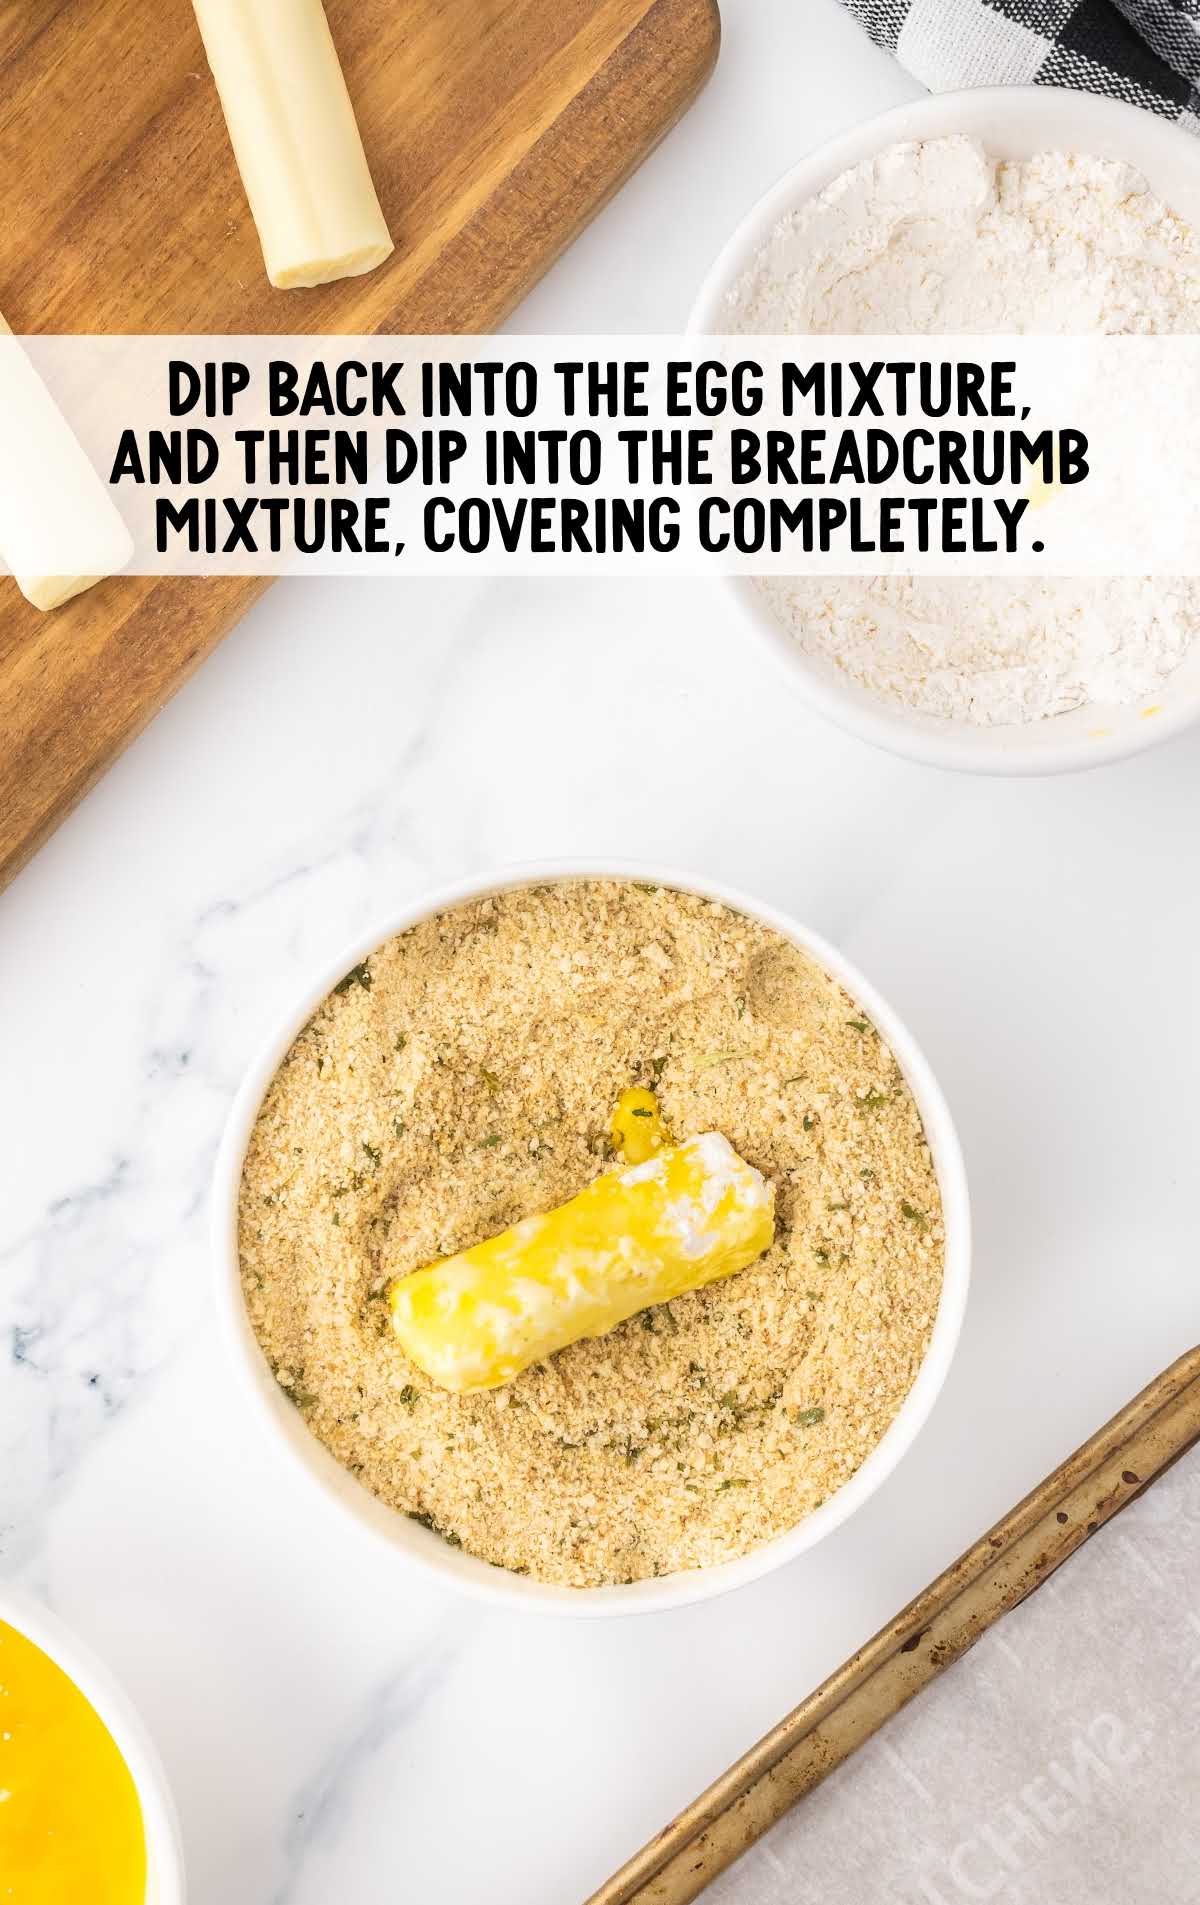 dip mozzarella into the breadcrumb and egg mixtures